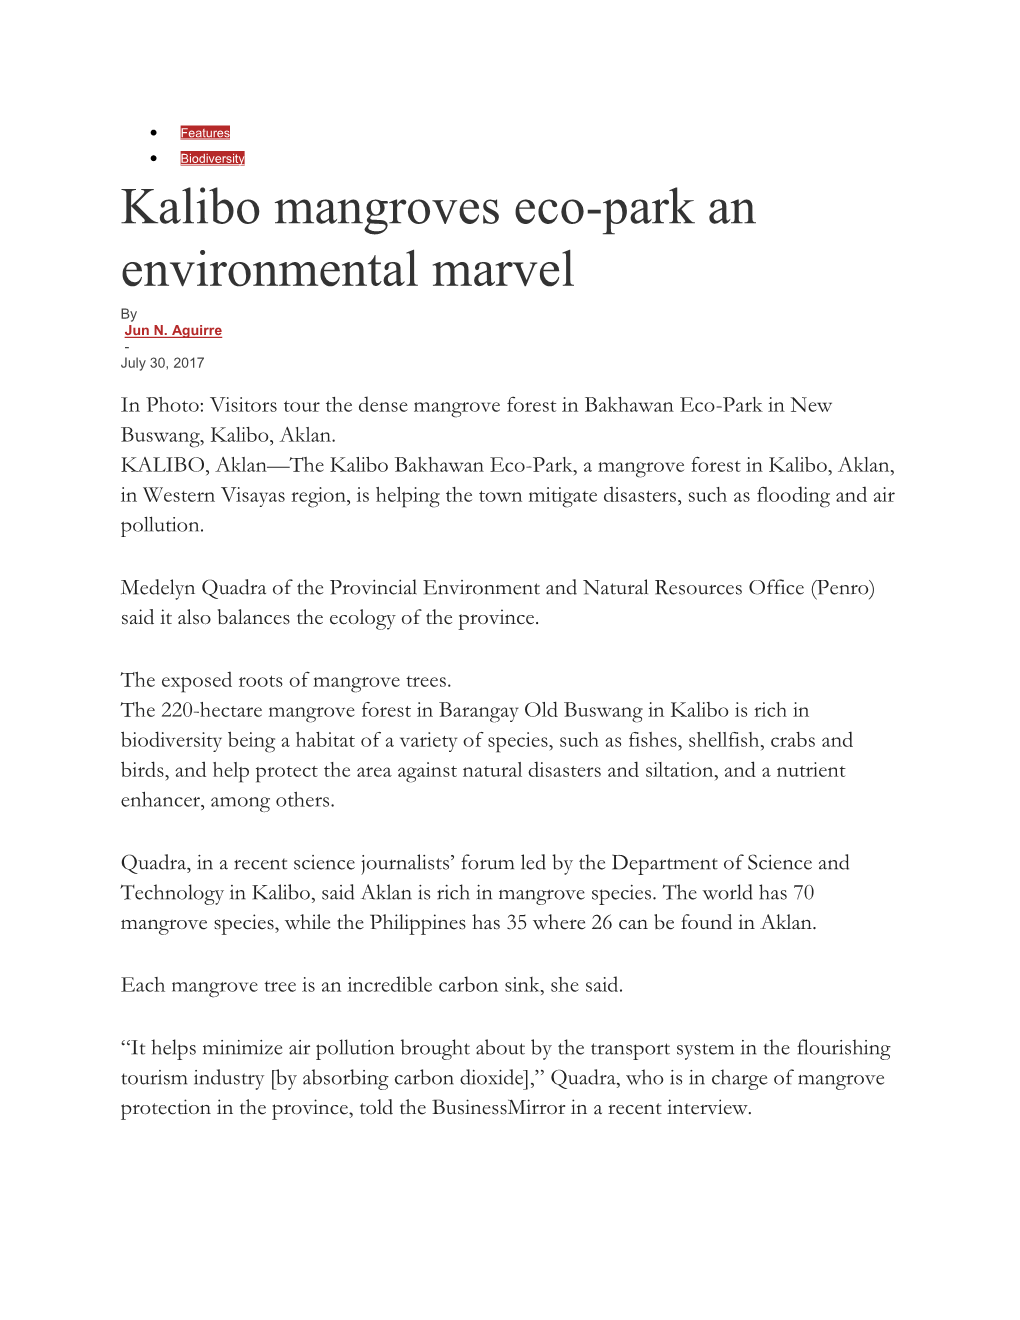 Kalibo Mangroves Eco-Park an Environmental Marvel by Jun N